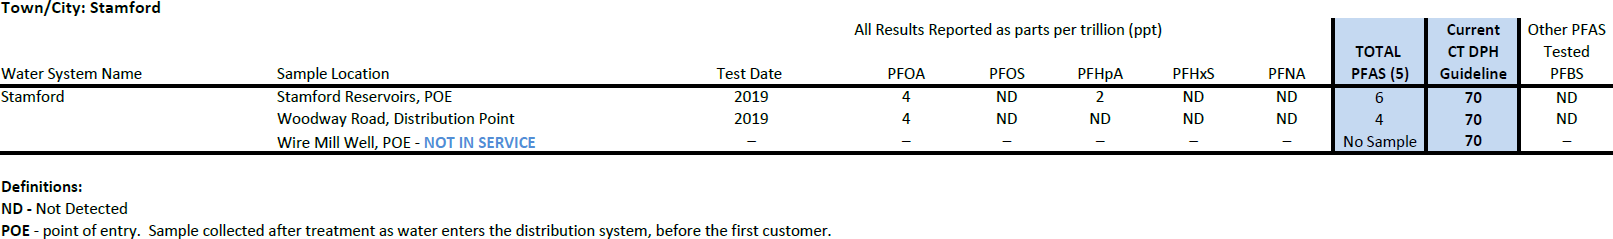 Stamford System PFAS sampling results